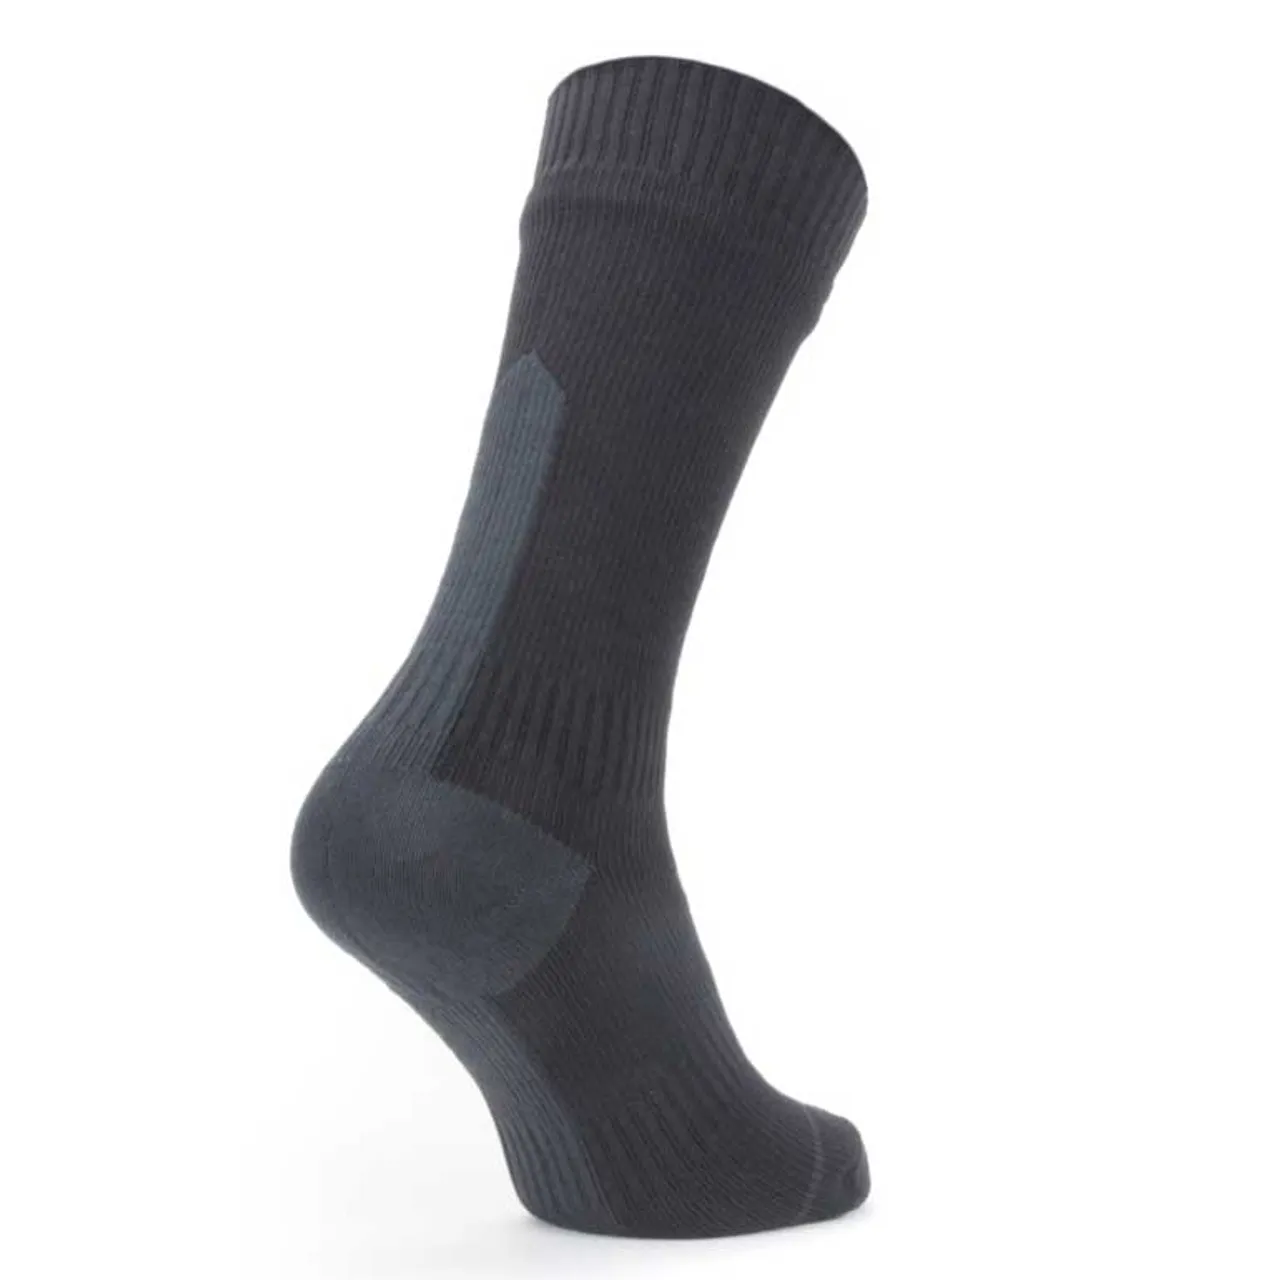 Sealskinz Waterproof All Weather Mid Length Socks with Hydrostop (Black/Grey)